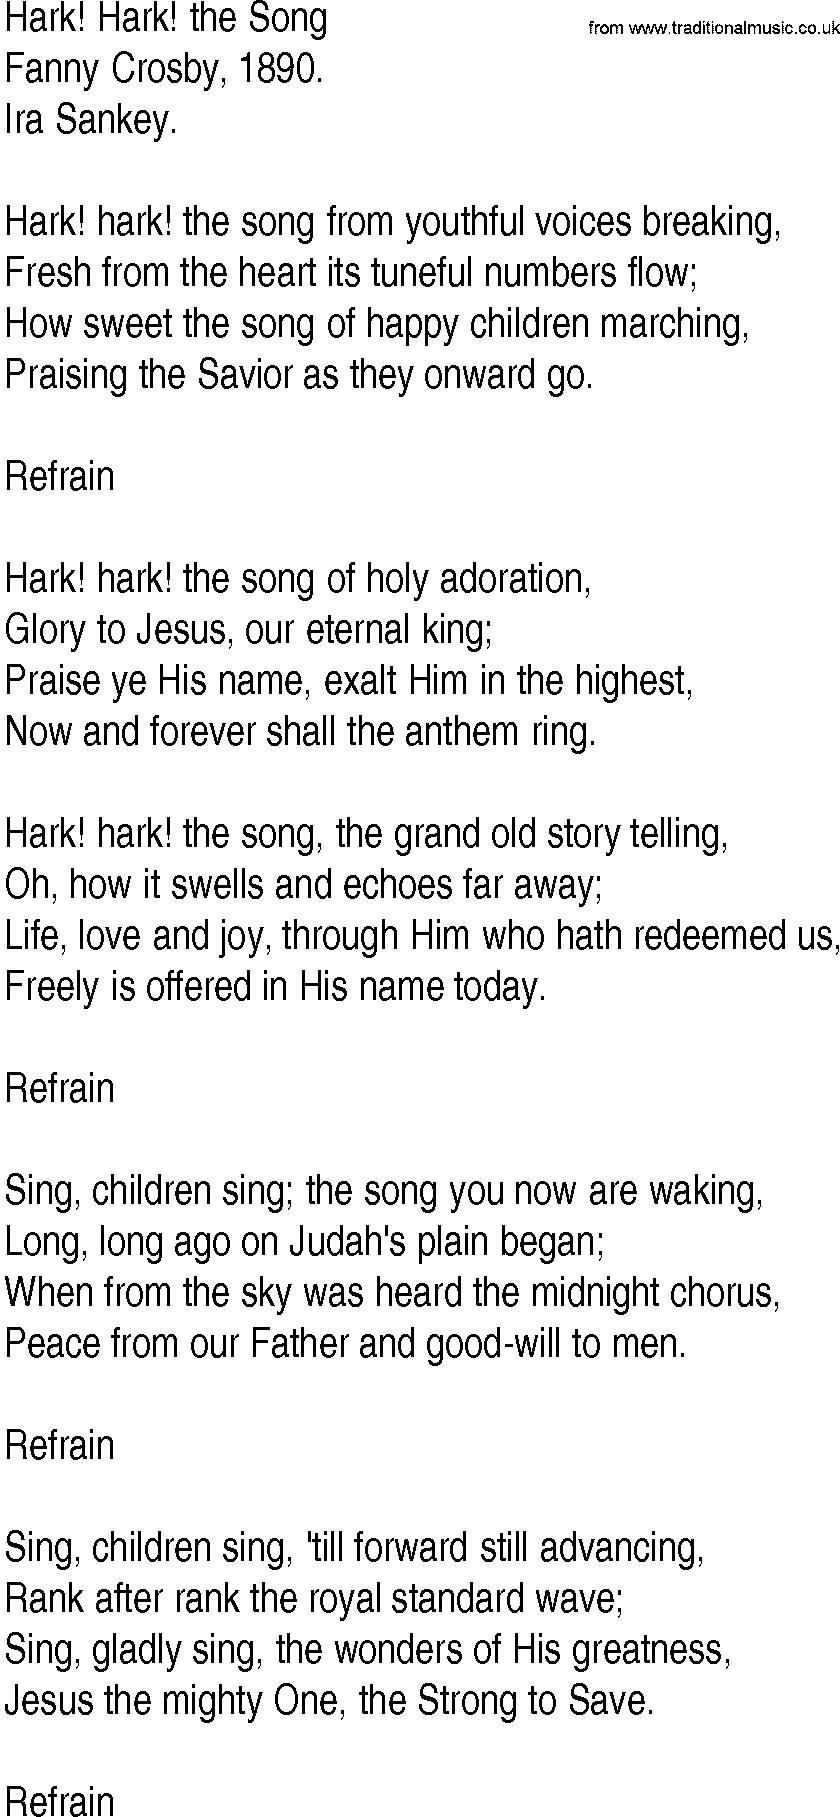 Hymn and Gospel Song: Hark! Hark! the Song by Fanny Crosby lyrics